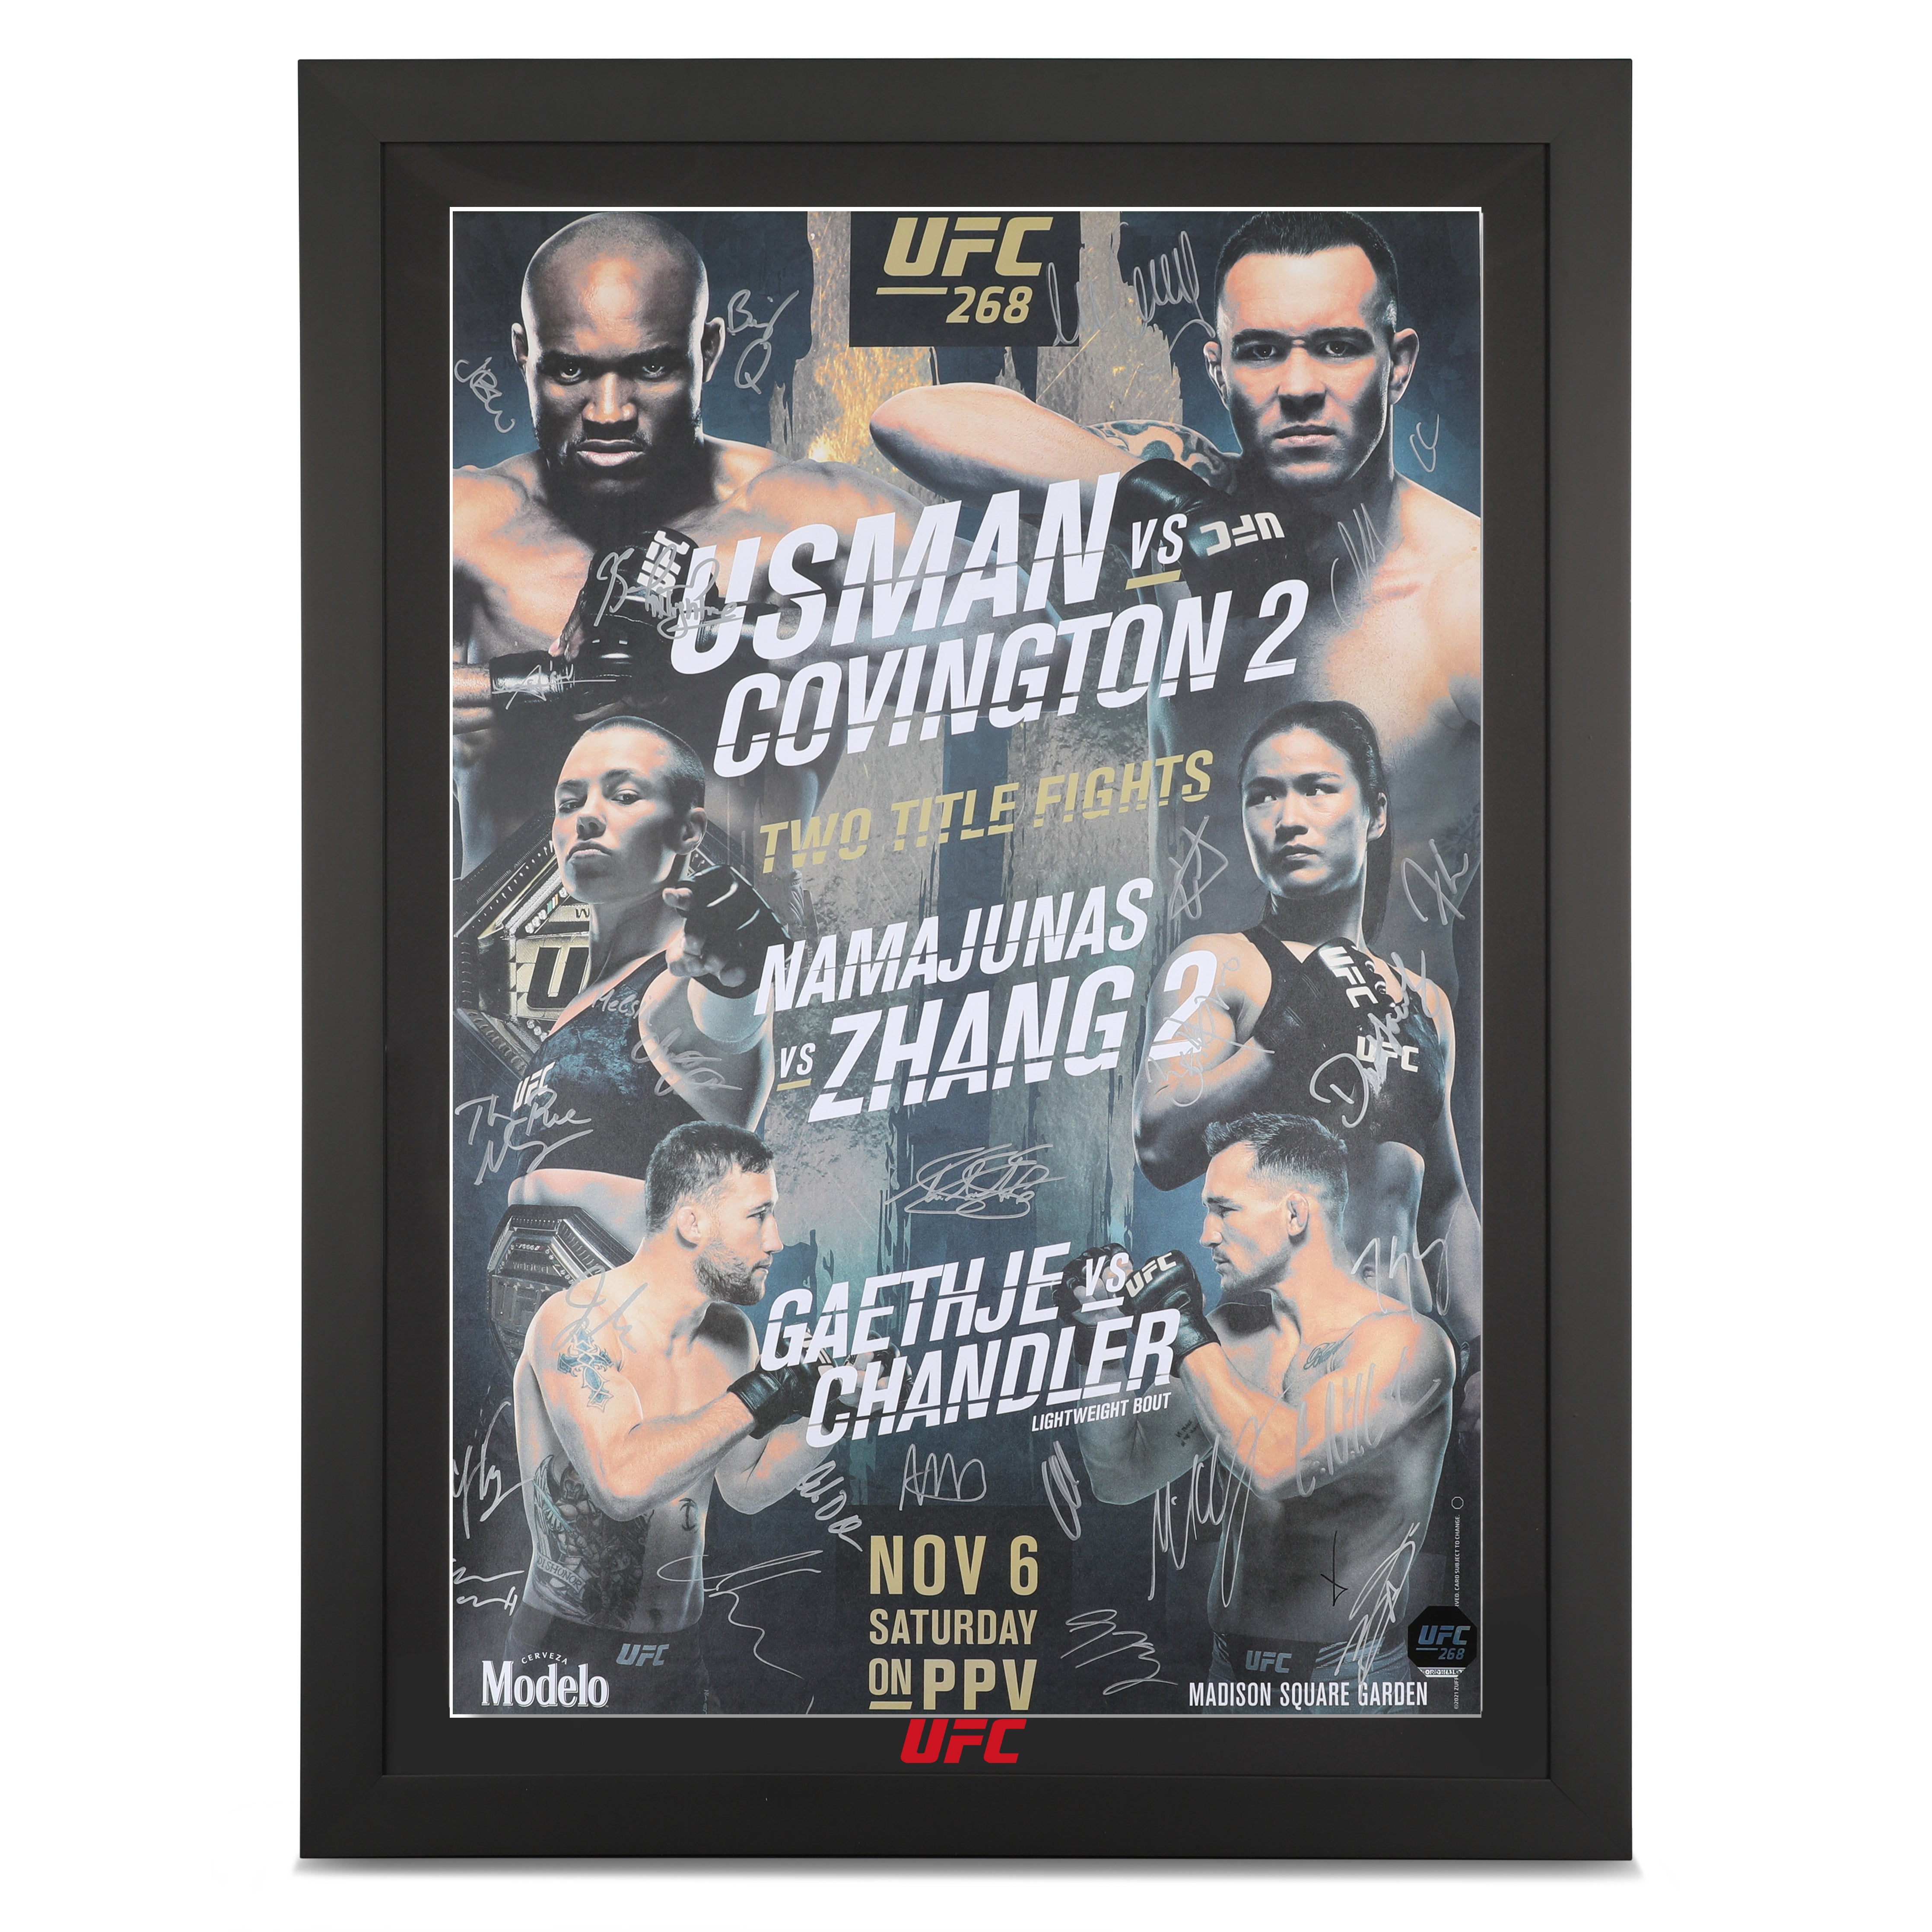 UFC 268: Usman vs. Covington 2 Signed Event Poster